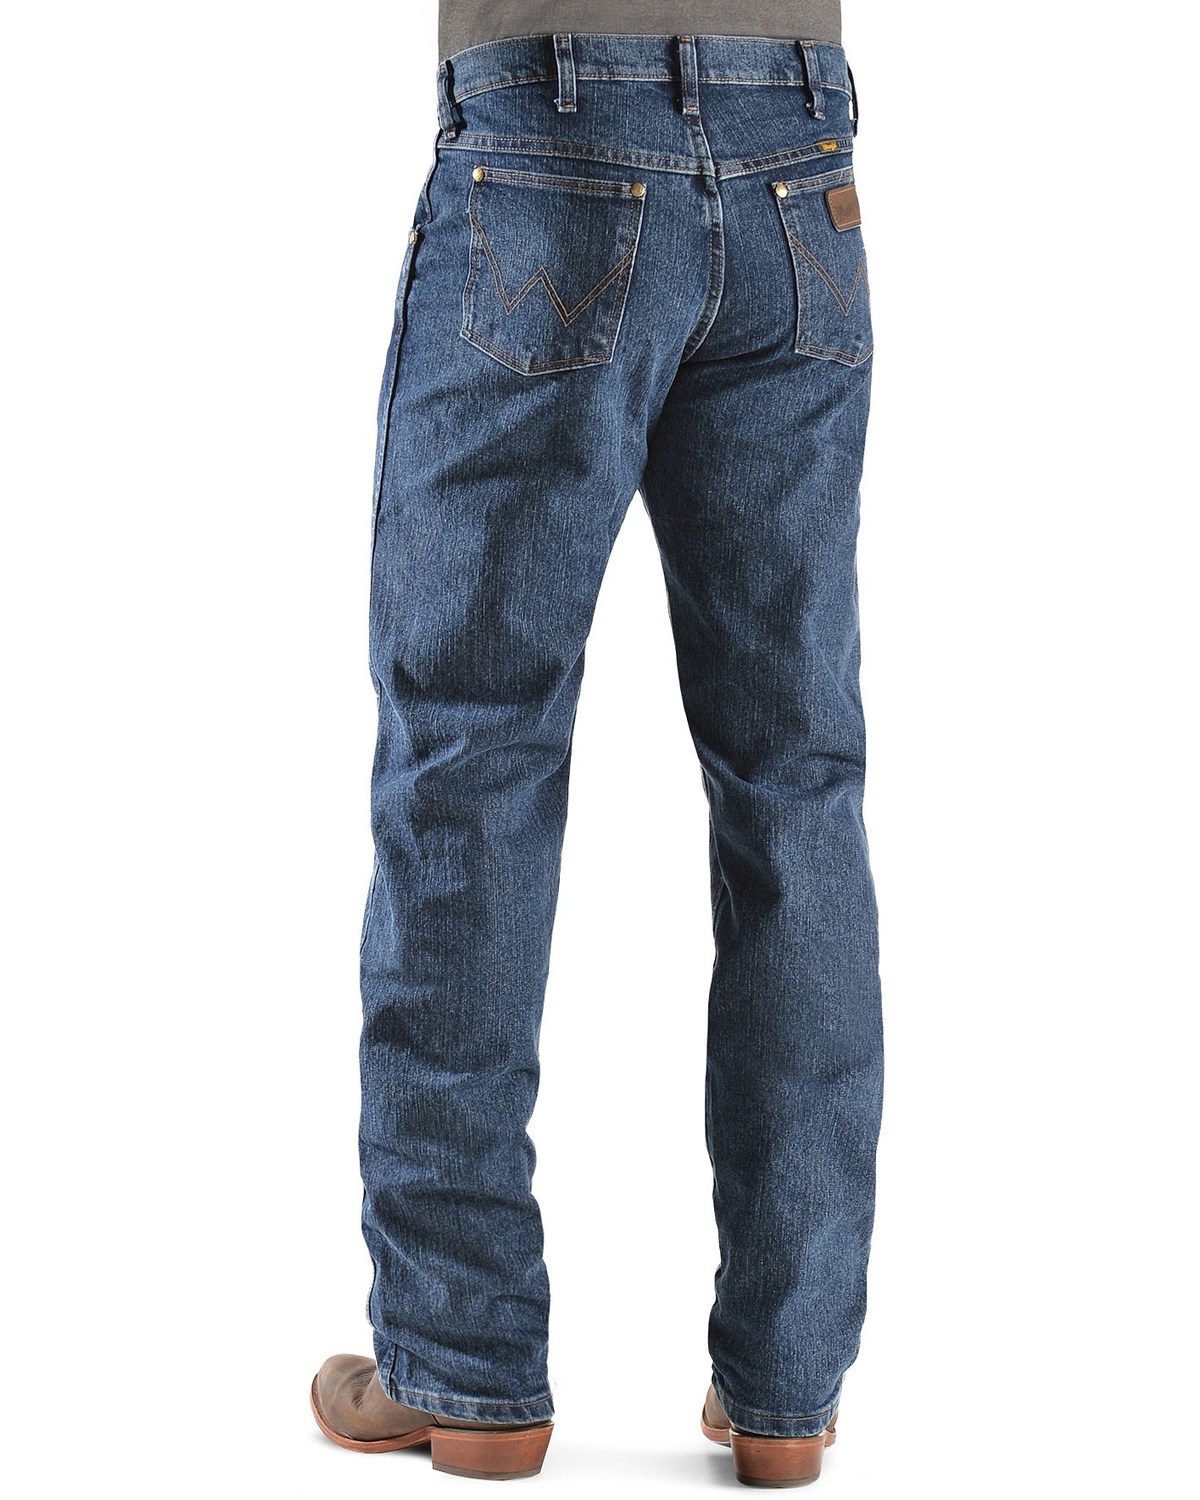 Wrangler Men's Premium Performance Advanced Comfort Mid Stone Jeans - Big & Tall